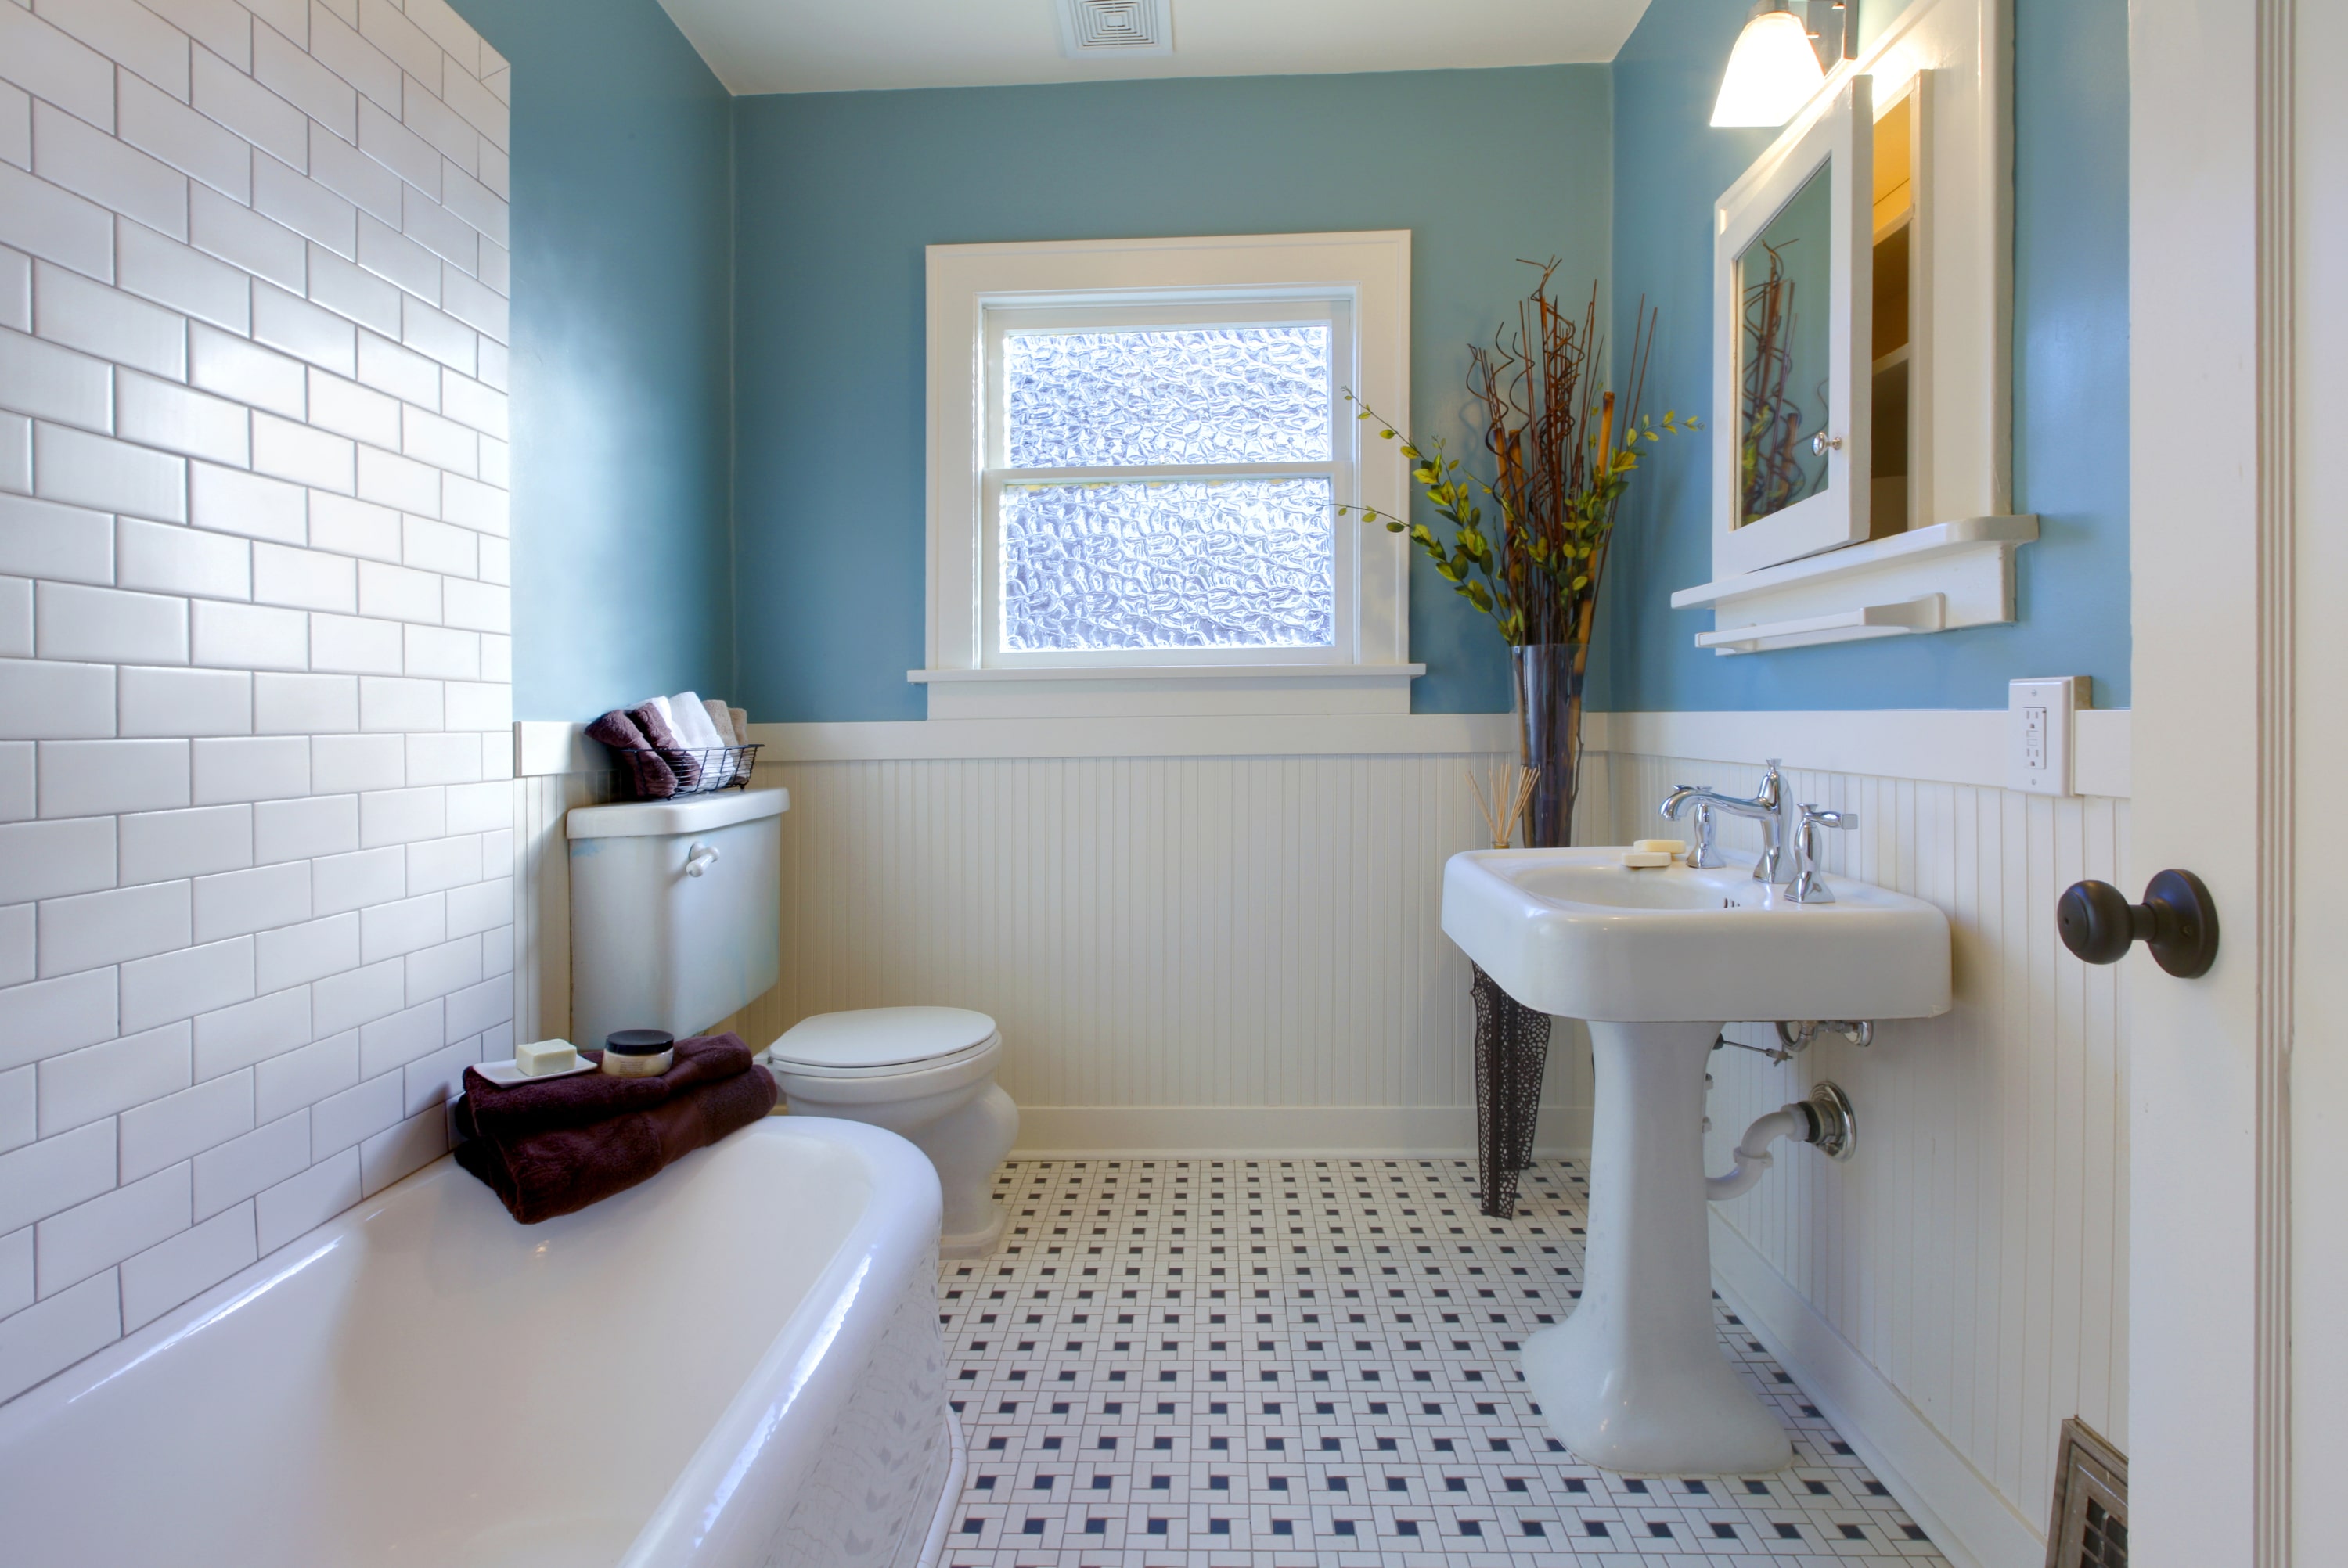 Beautiful Bathroom Renovation, How To Renovate An Old Bathroom On A Budget